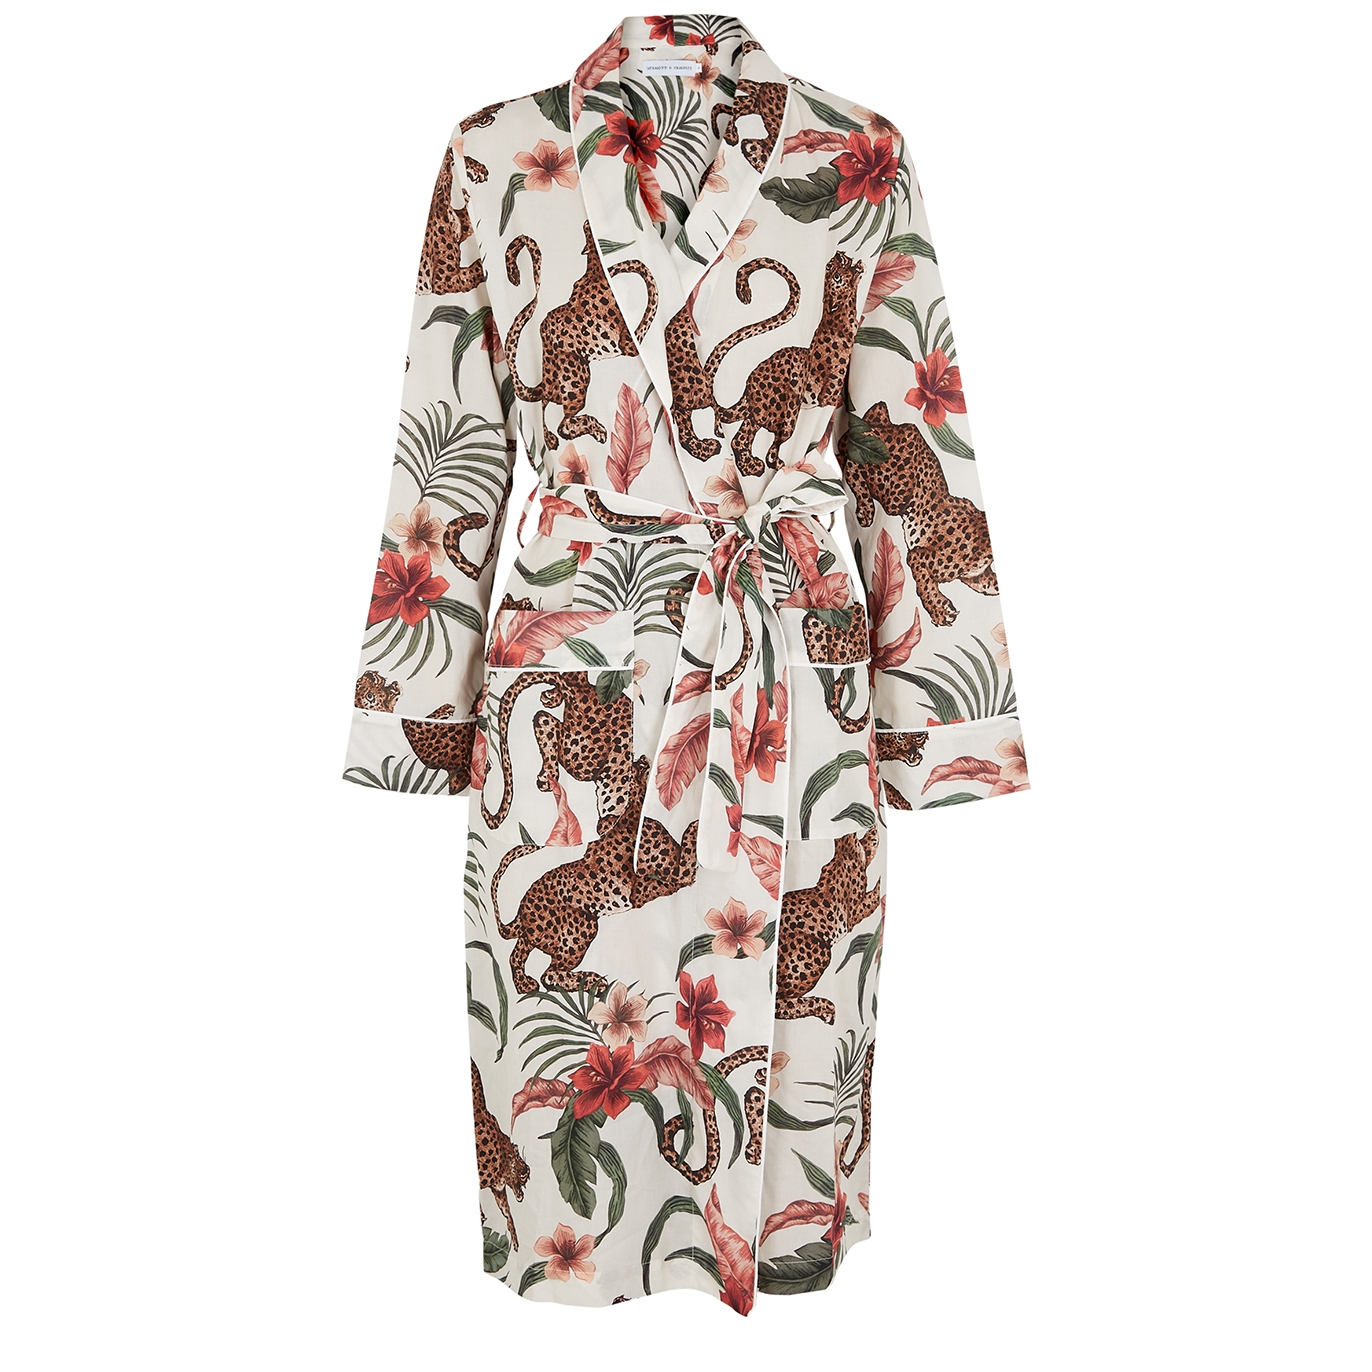 Desmond & Dempsey Soleia printed cotton robe - Harvey Nichols